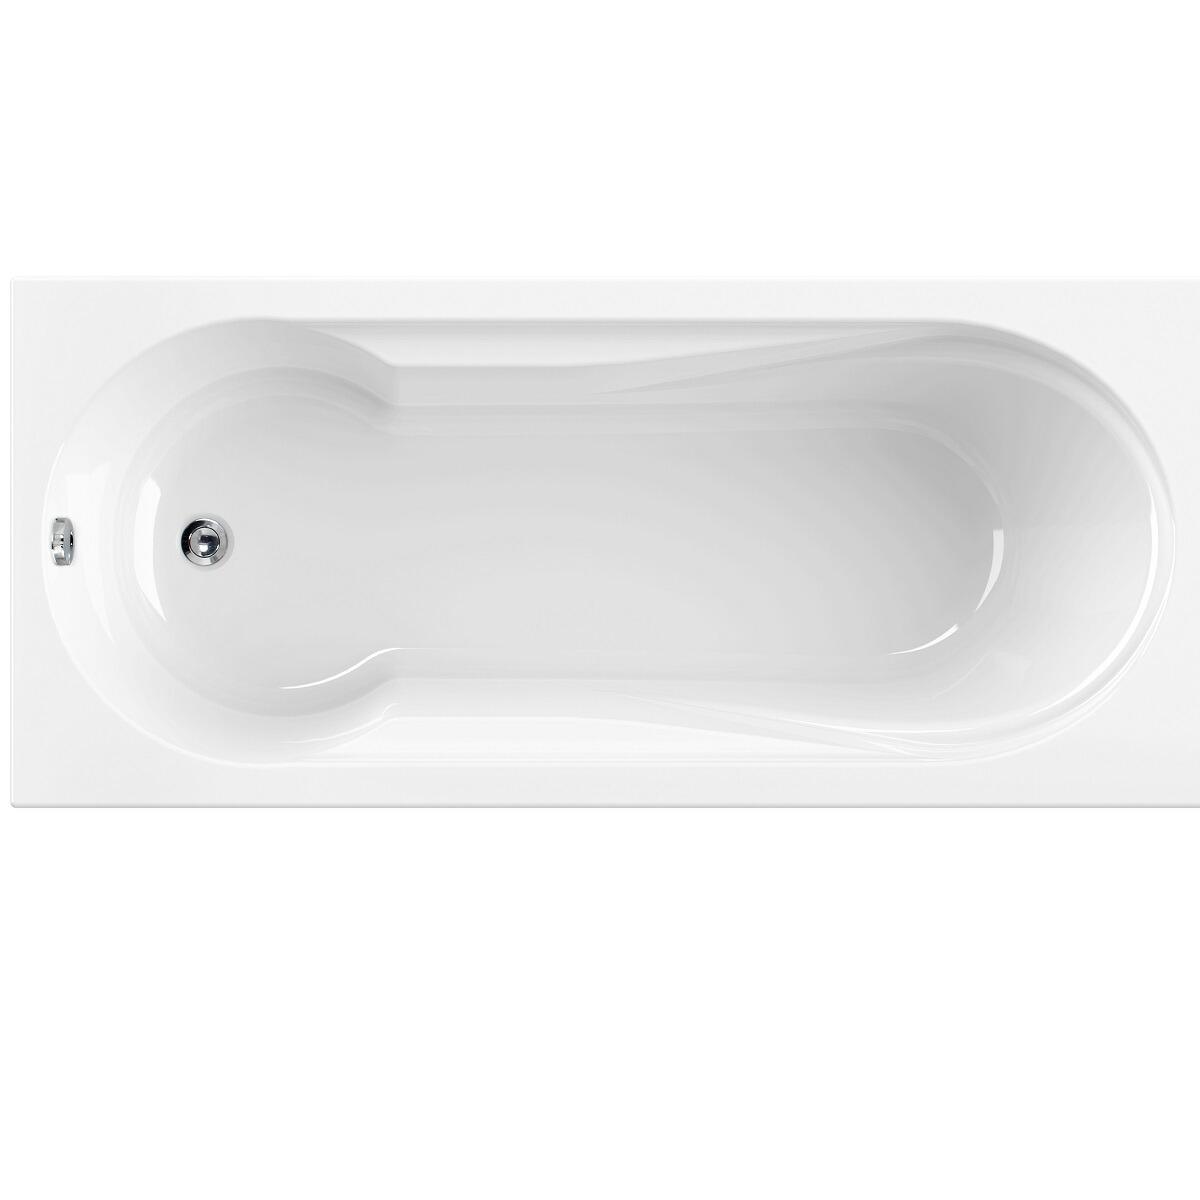 An image of Aquaestil Modena Single Ended 1700Mm X 700Mm Inset Straight Acrylic Bath